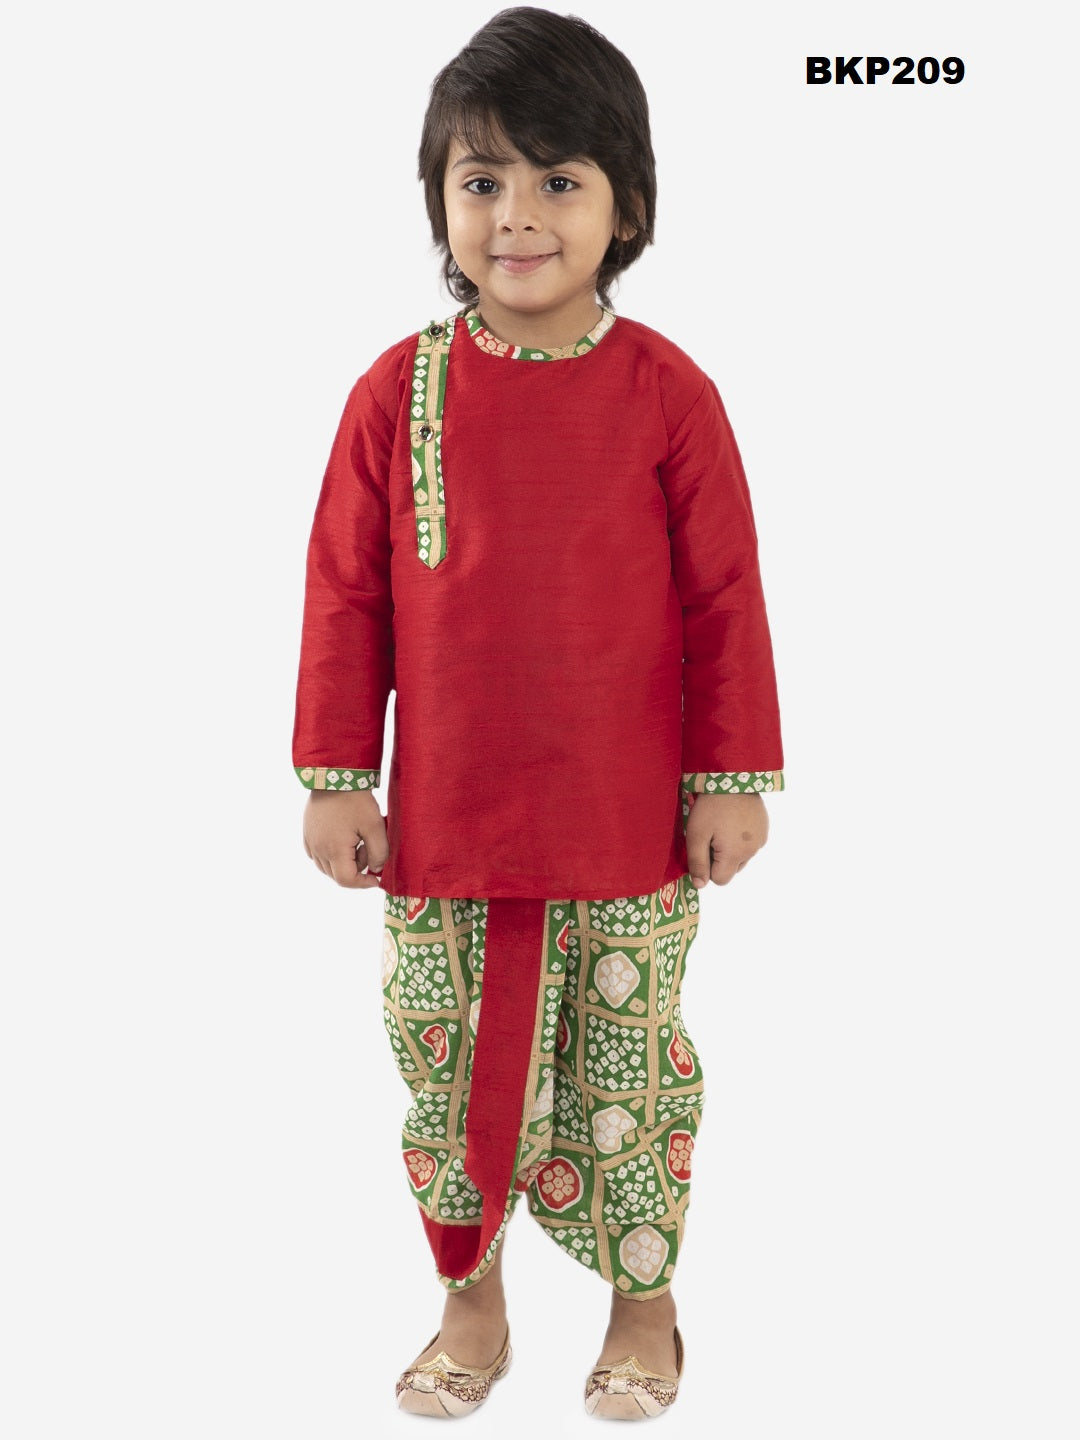 BKP209 - Festive combo green and red cotton kurta dhoti set with bandhini print